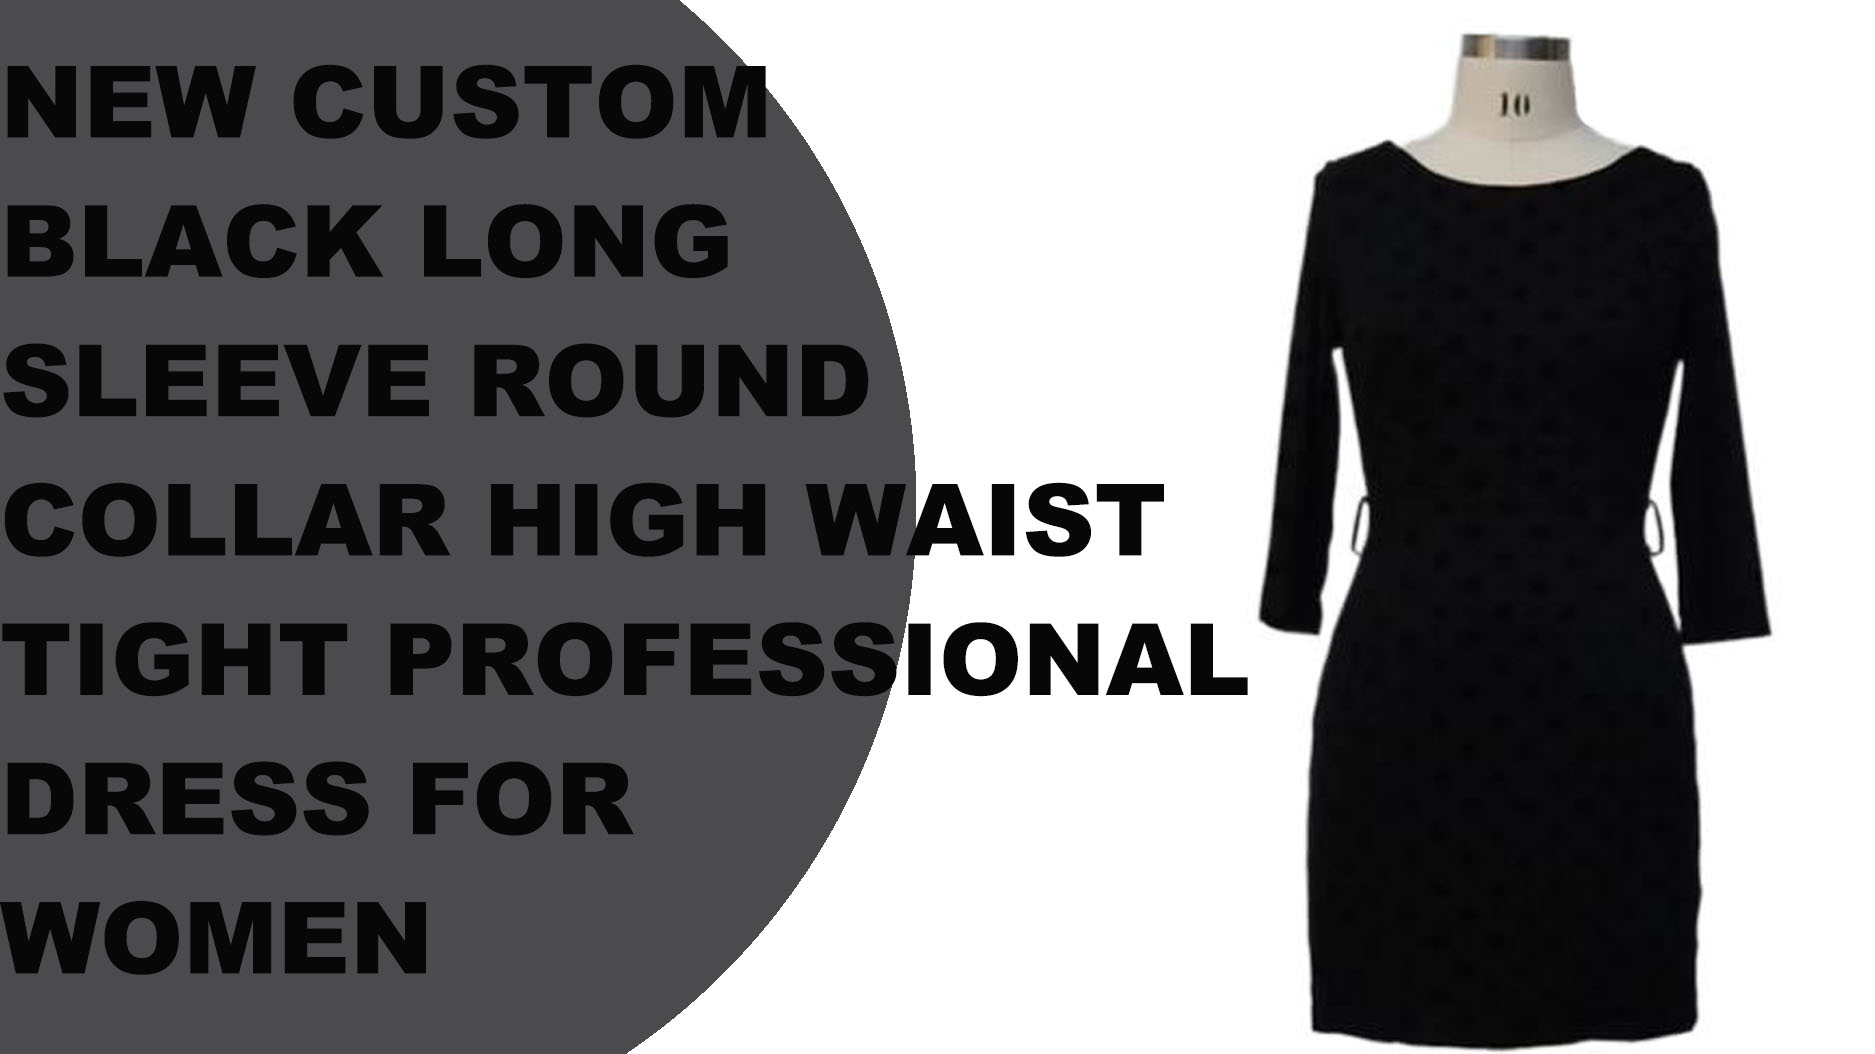 Best New custom black long sleeve round collar high waist tight tight professional dress for women Supplier